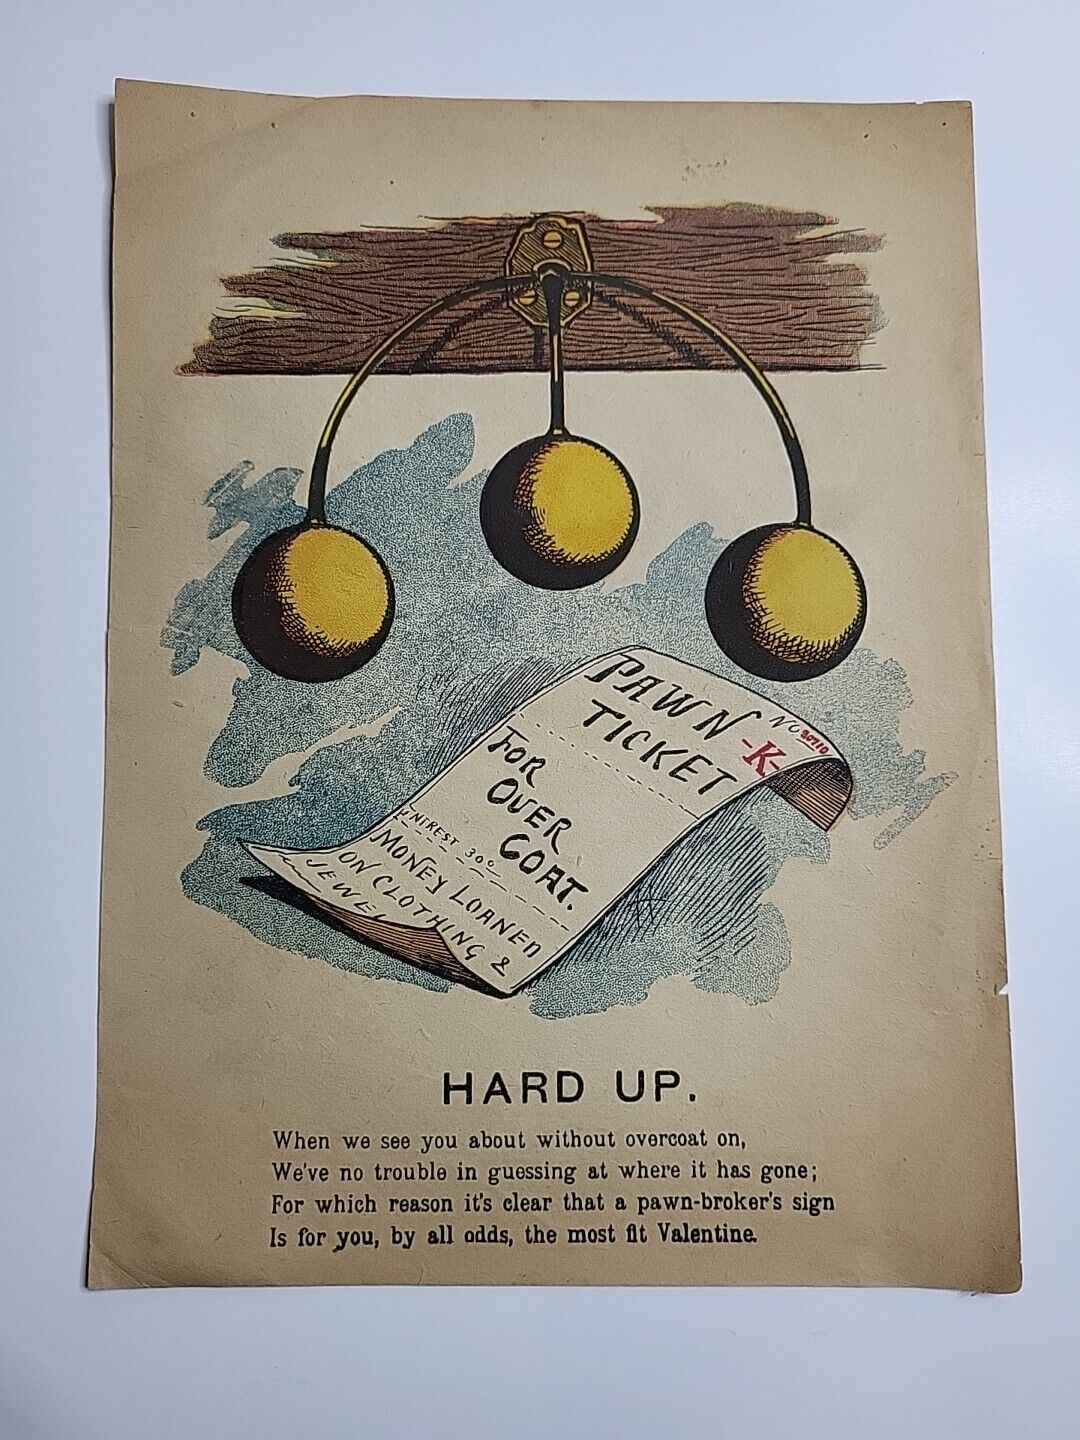 Antique Penny Dreadful Vinegar Valentine 1890s? - Hard Up Pawn Ticket